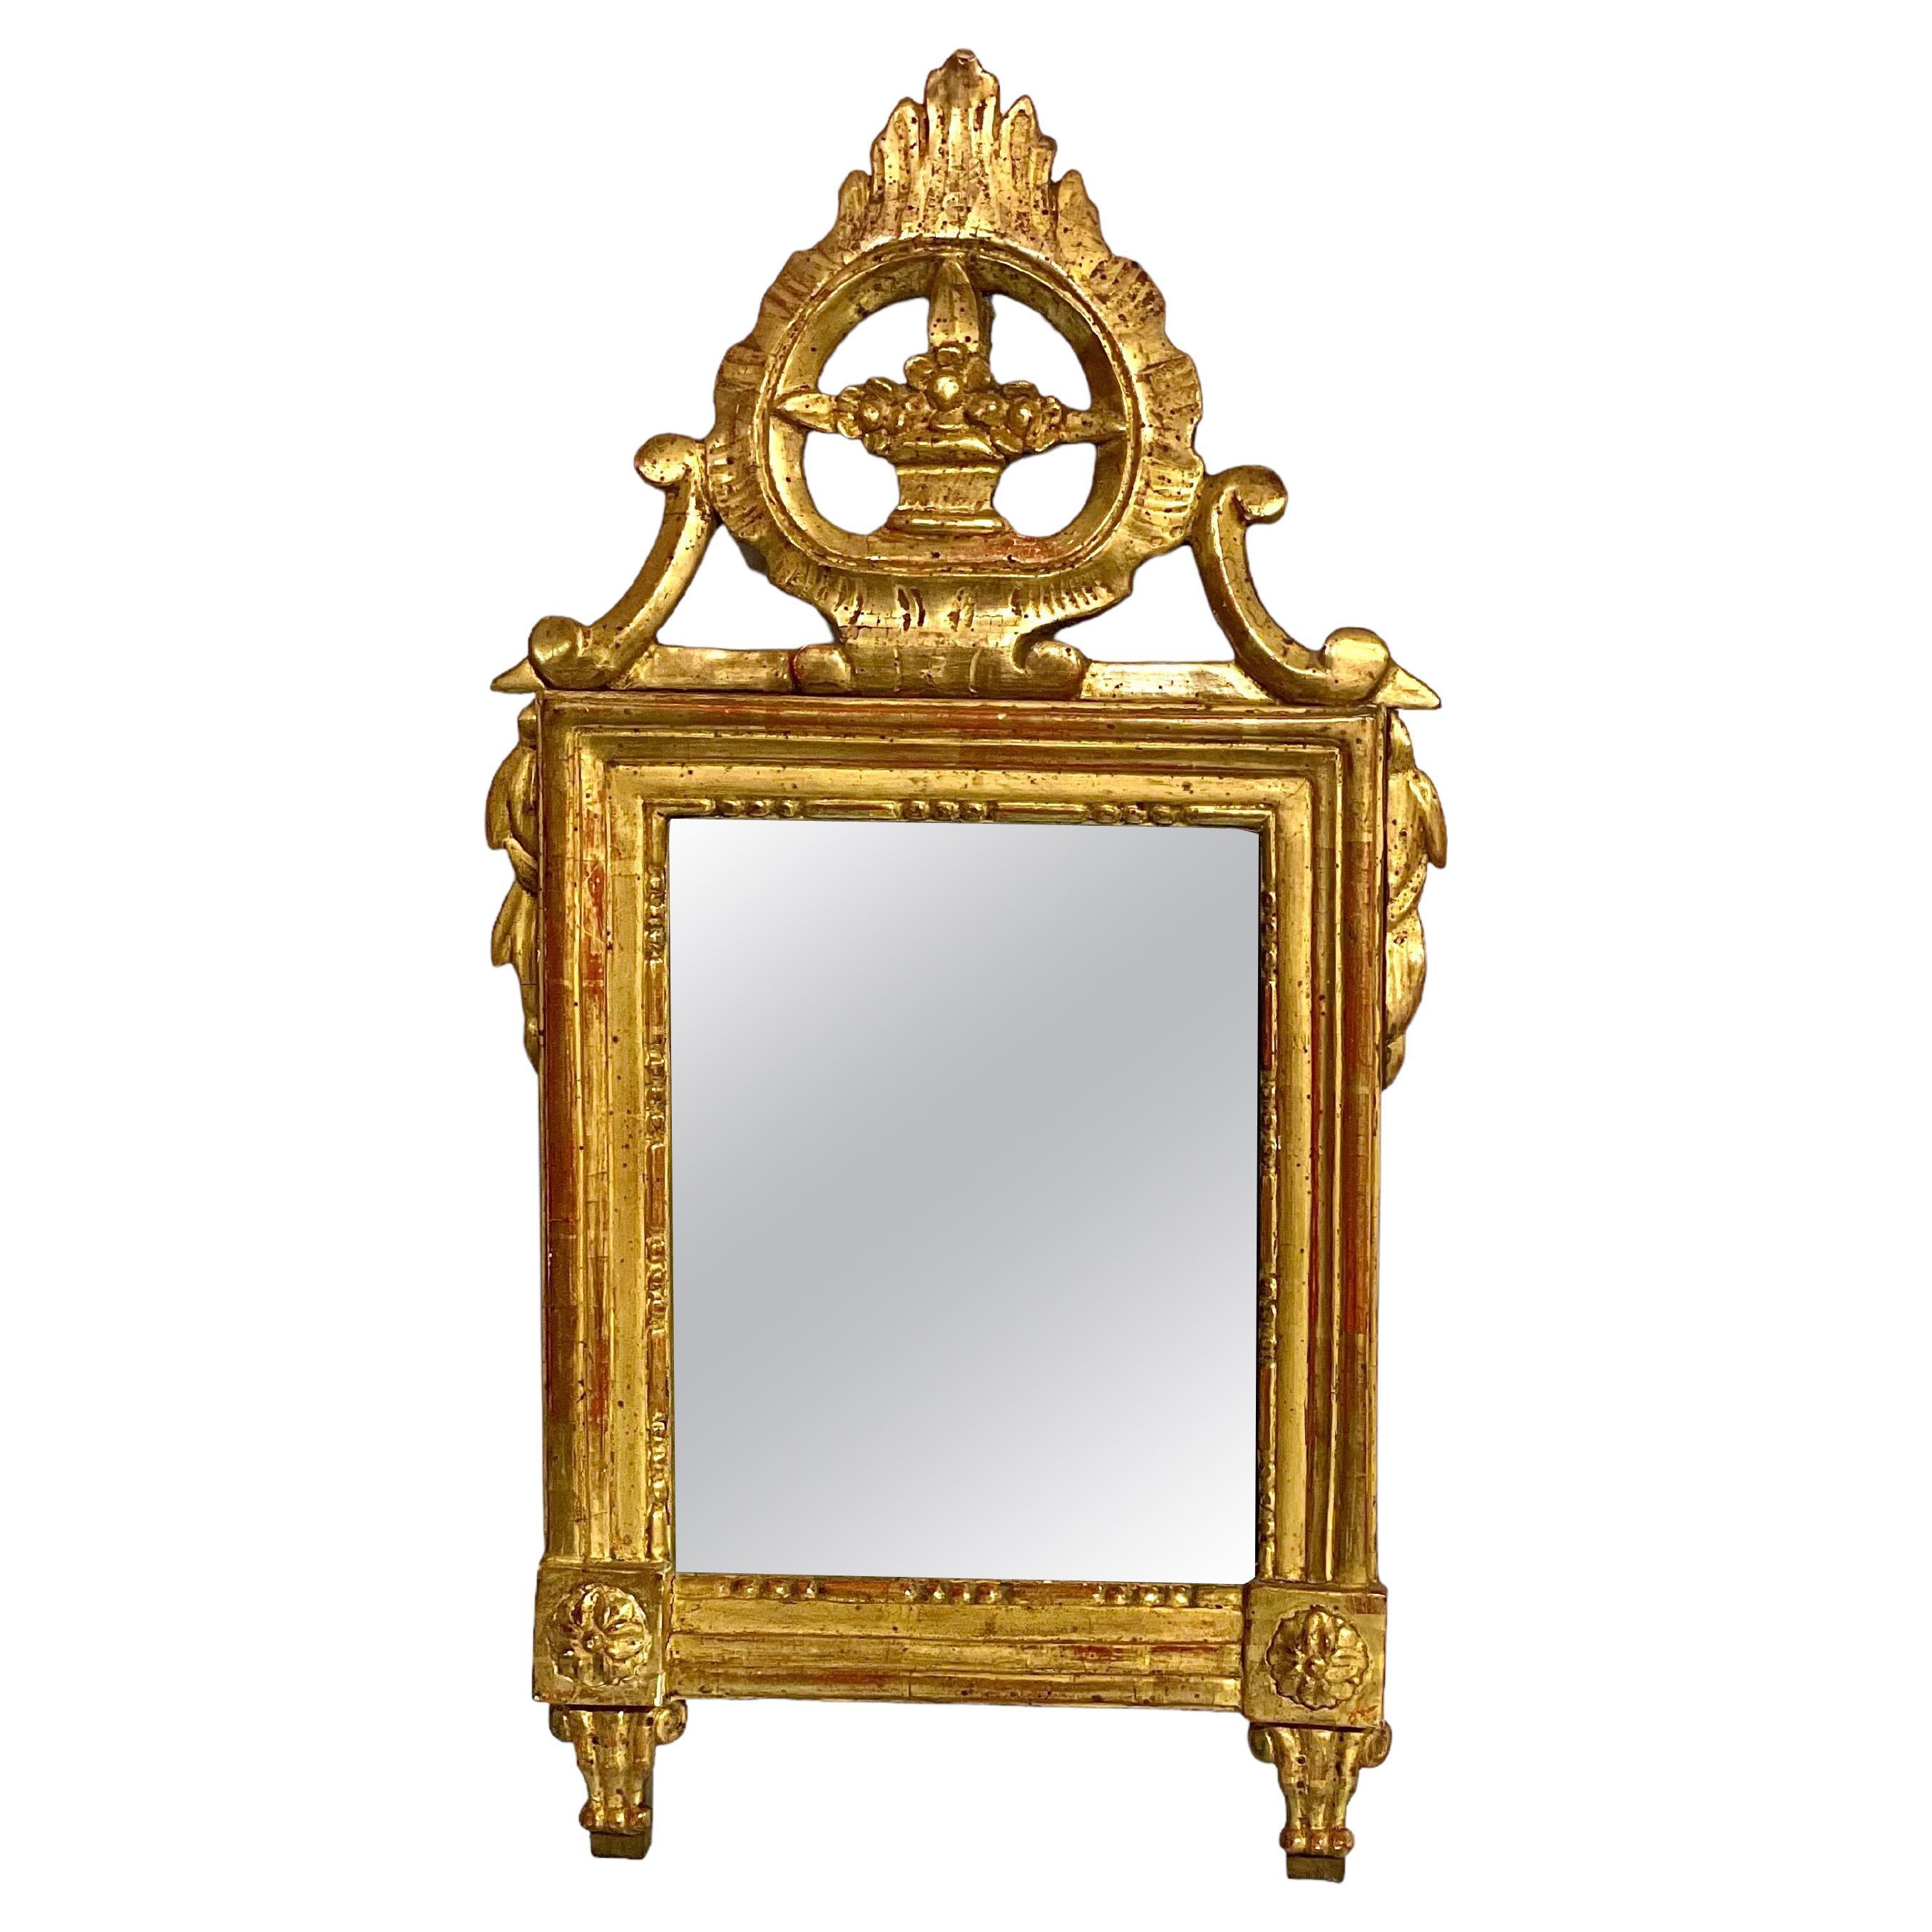 Espejo francés de madera dorada del siglo XVIII, época Luis XVI